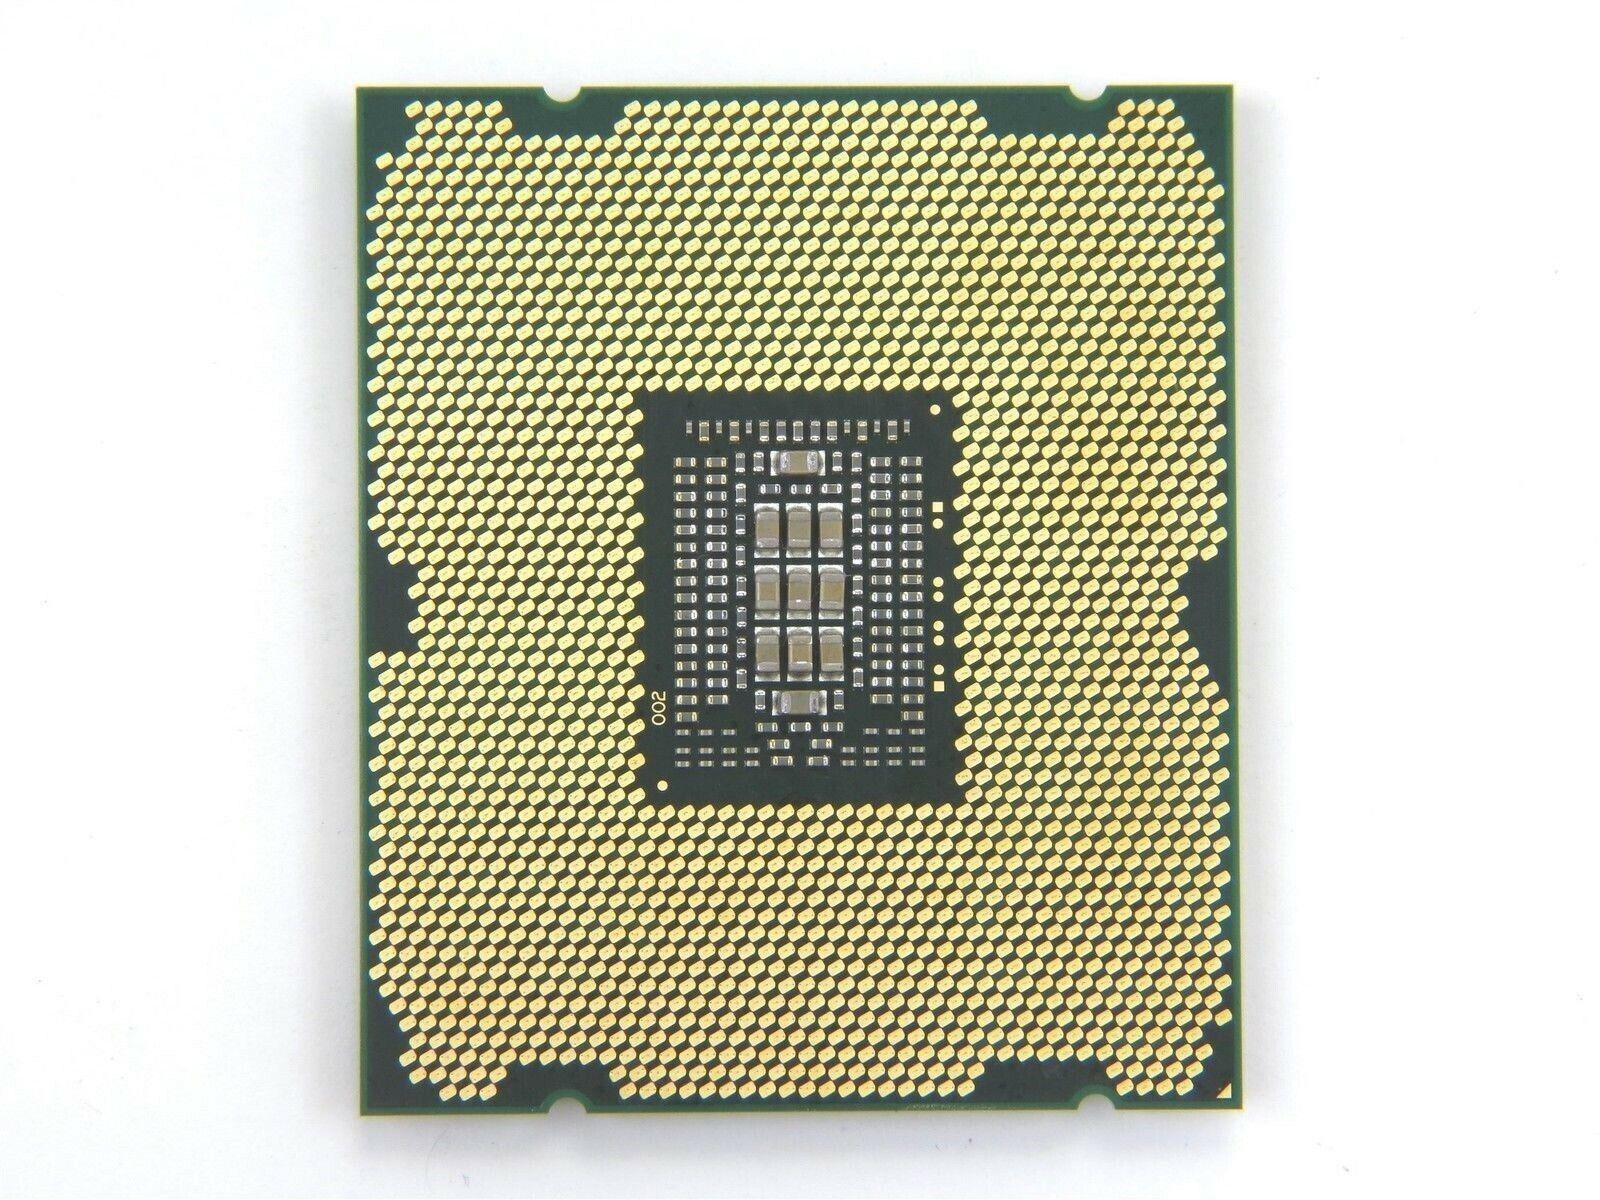 Intel Xeon E5-2660 2.2GHz 8 Core 20MB Cache Socket 2011 CPU Processor SR0KK